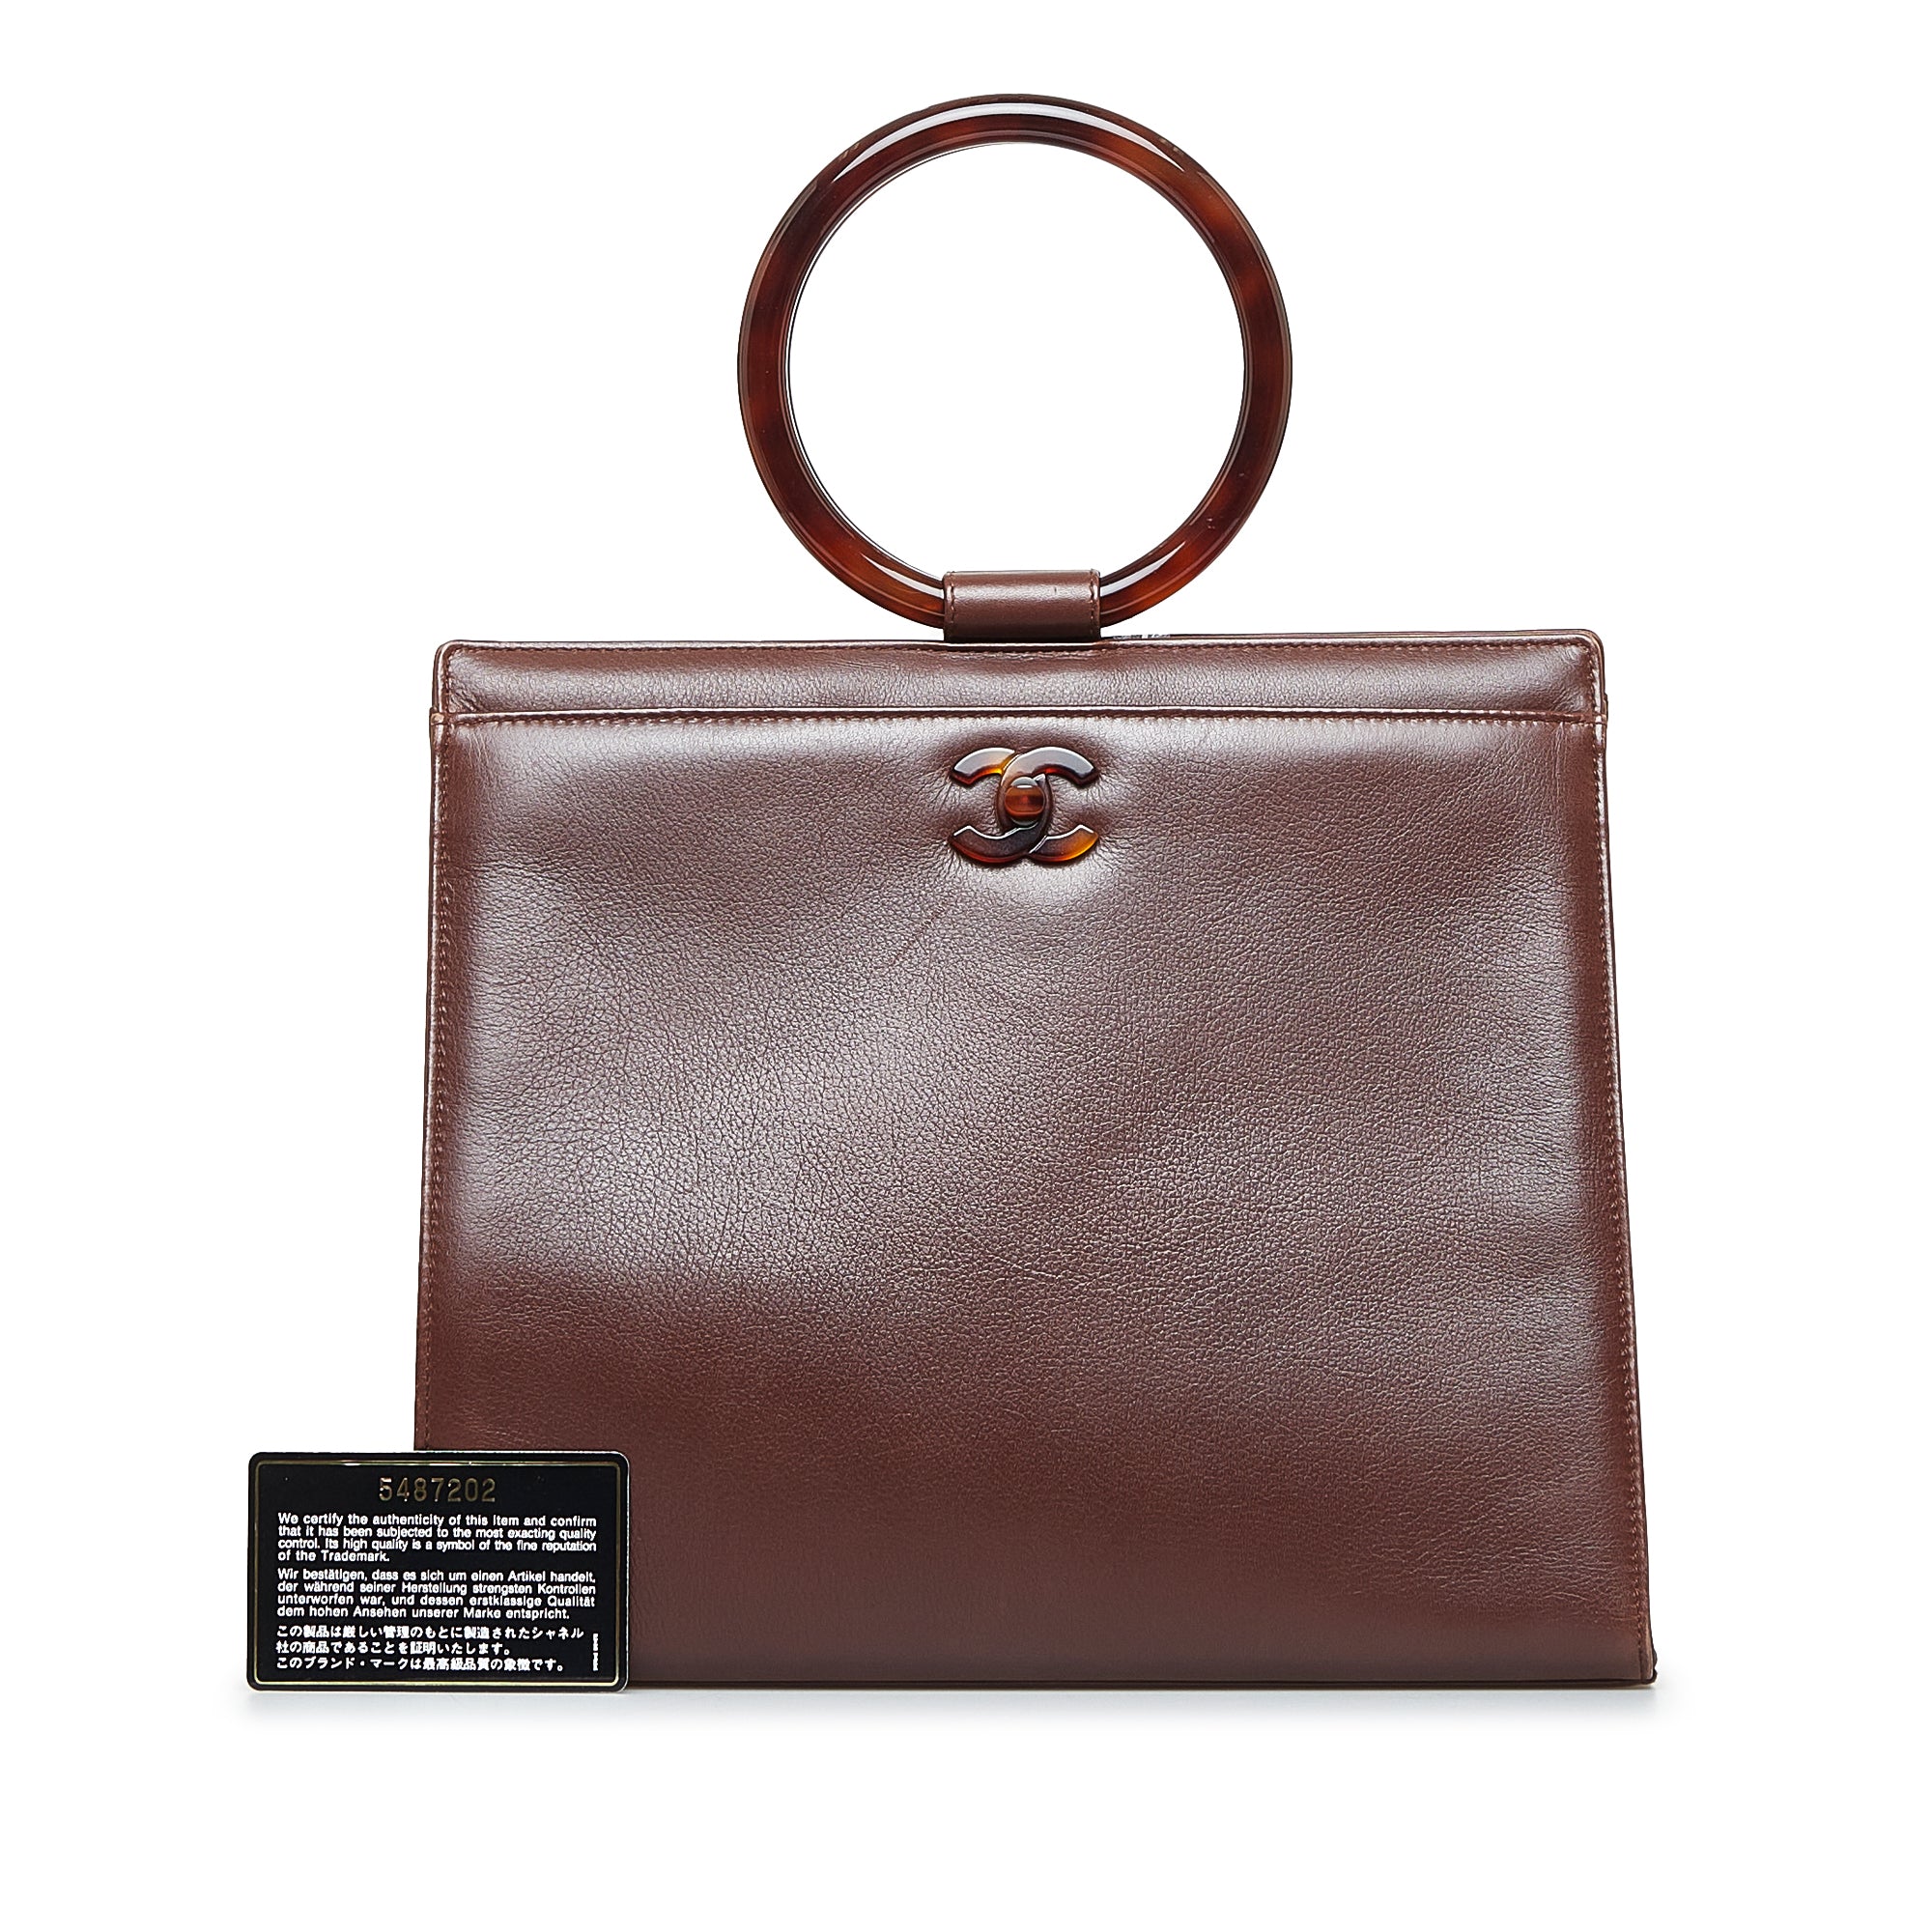 Heritage Vintage: Chanel Brown Lambskin Leather Shoulder Bag with